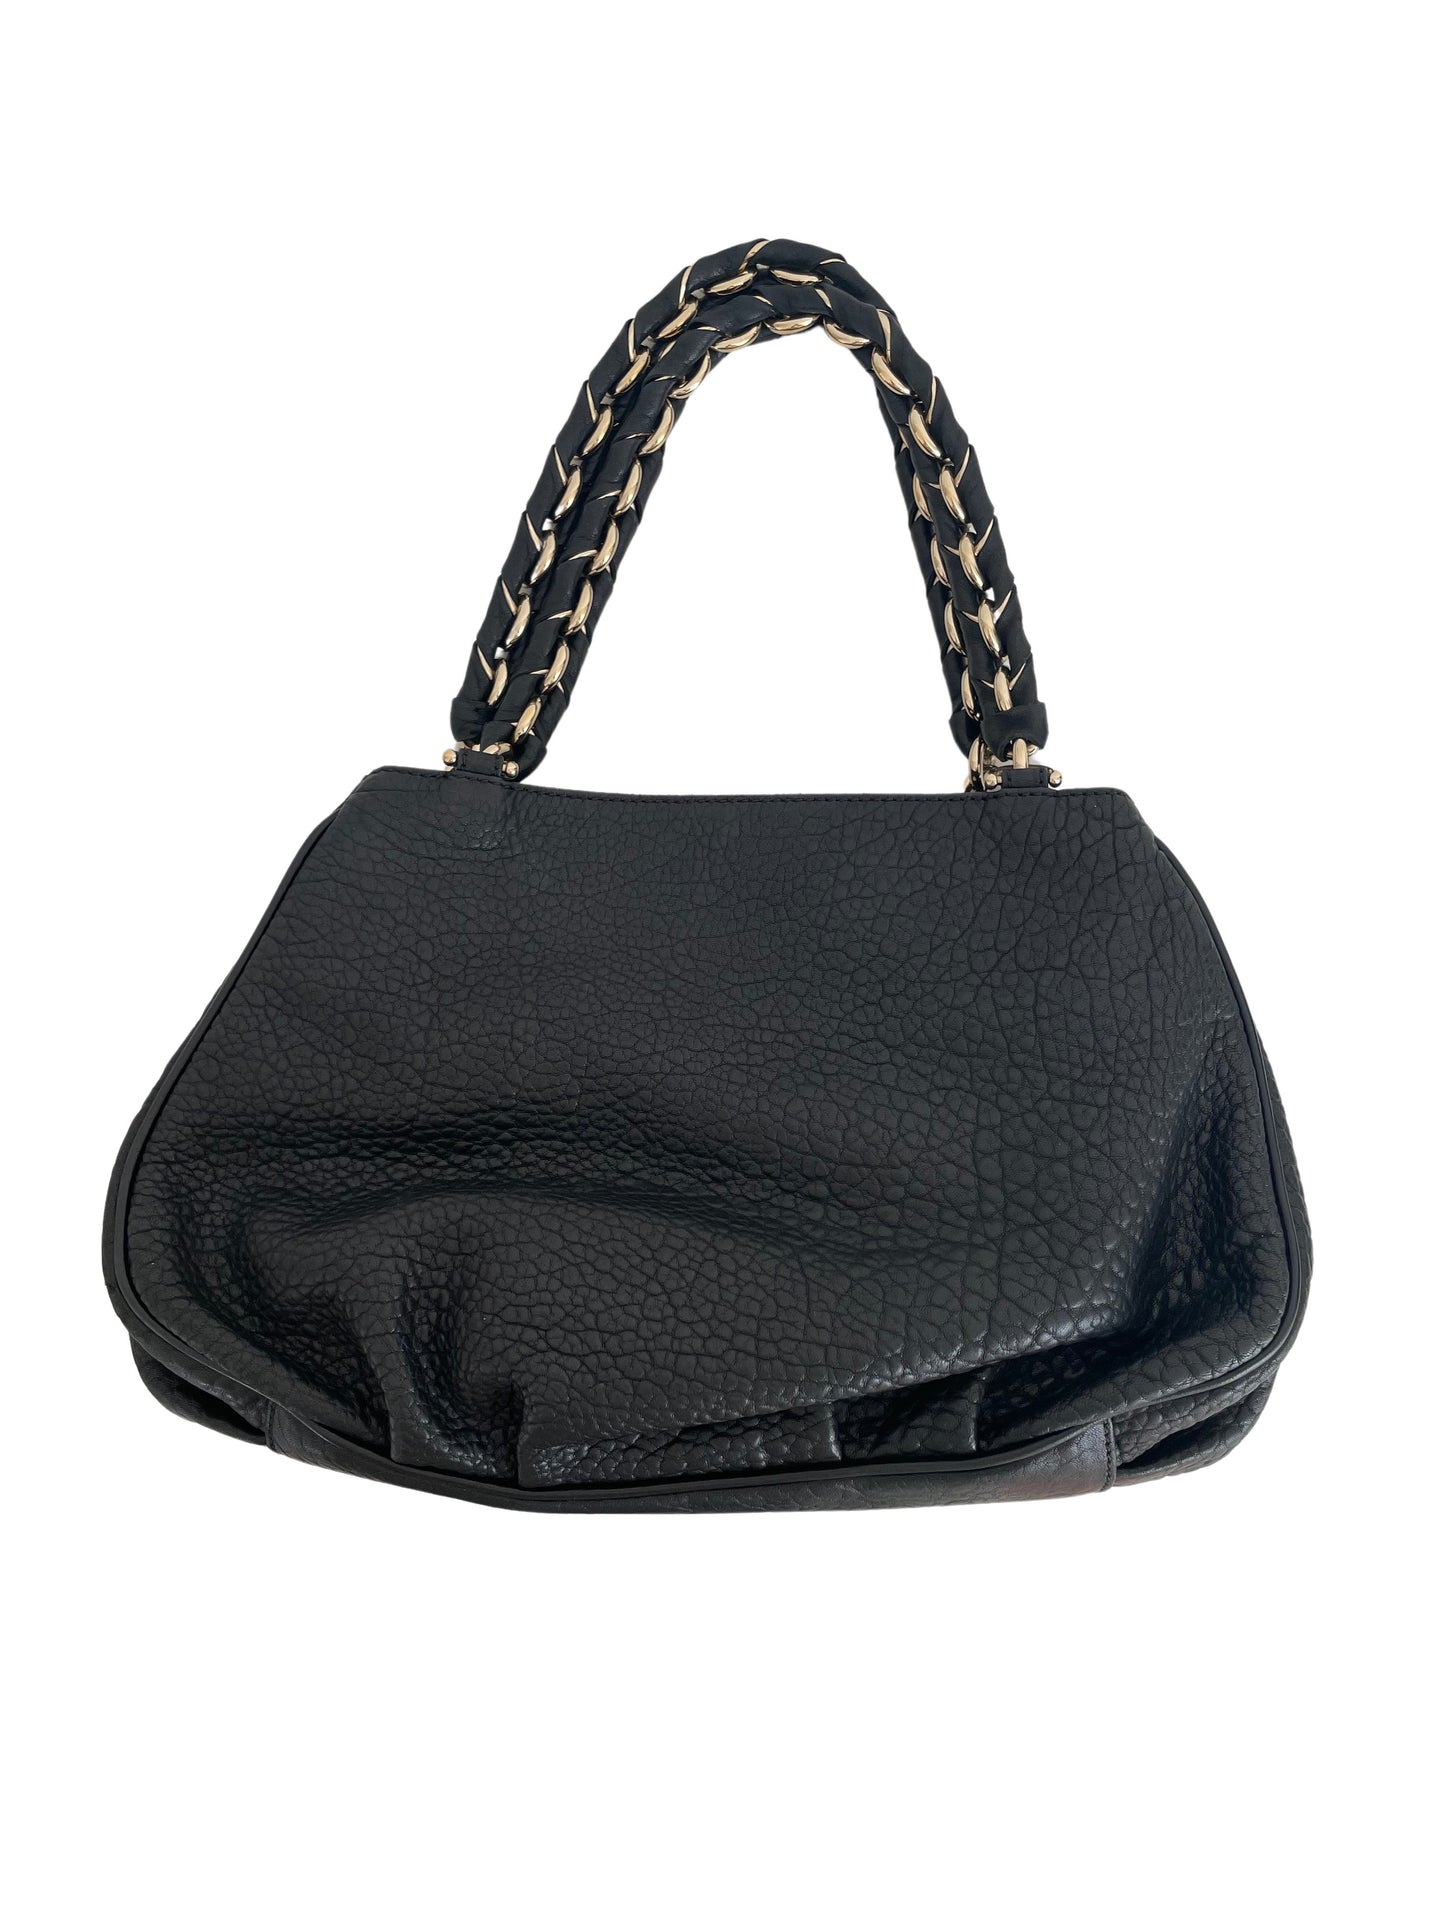 Fendi Mia Black Leather Bag